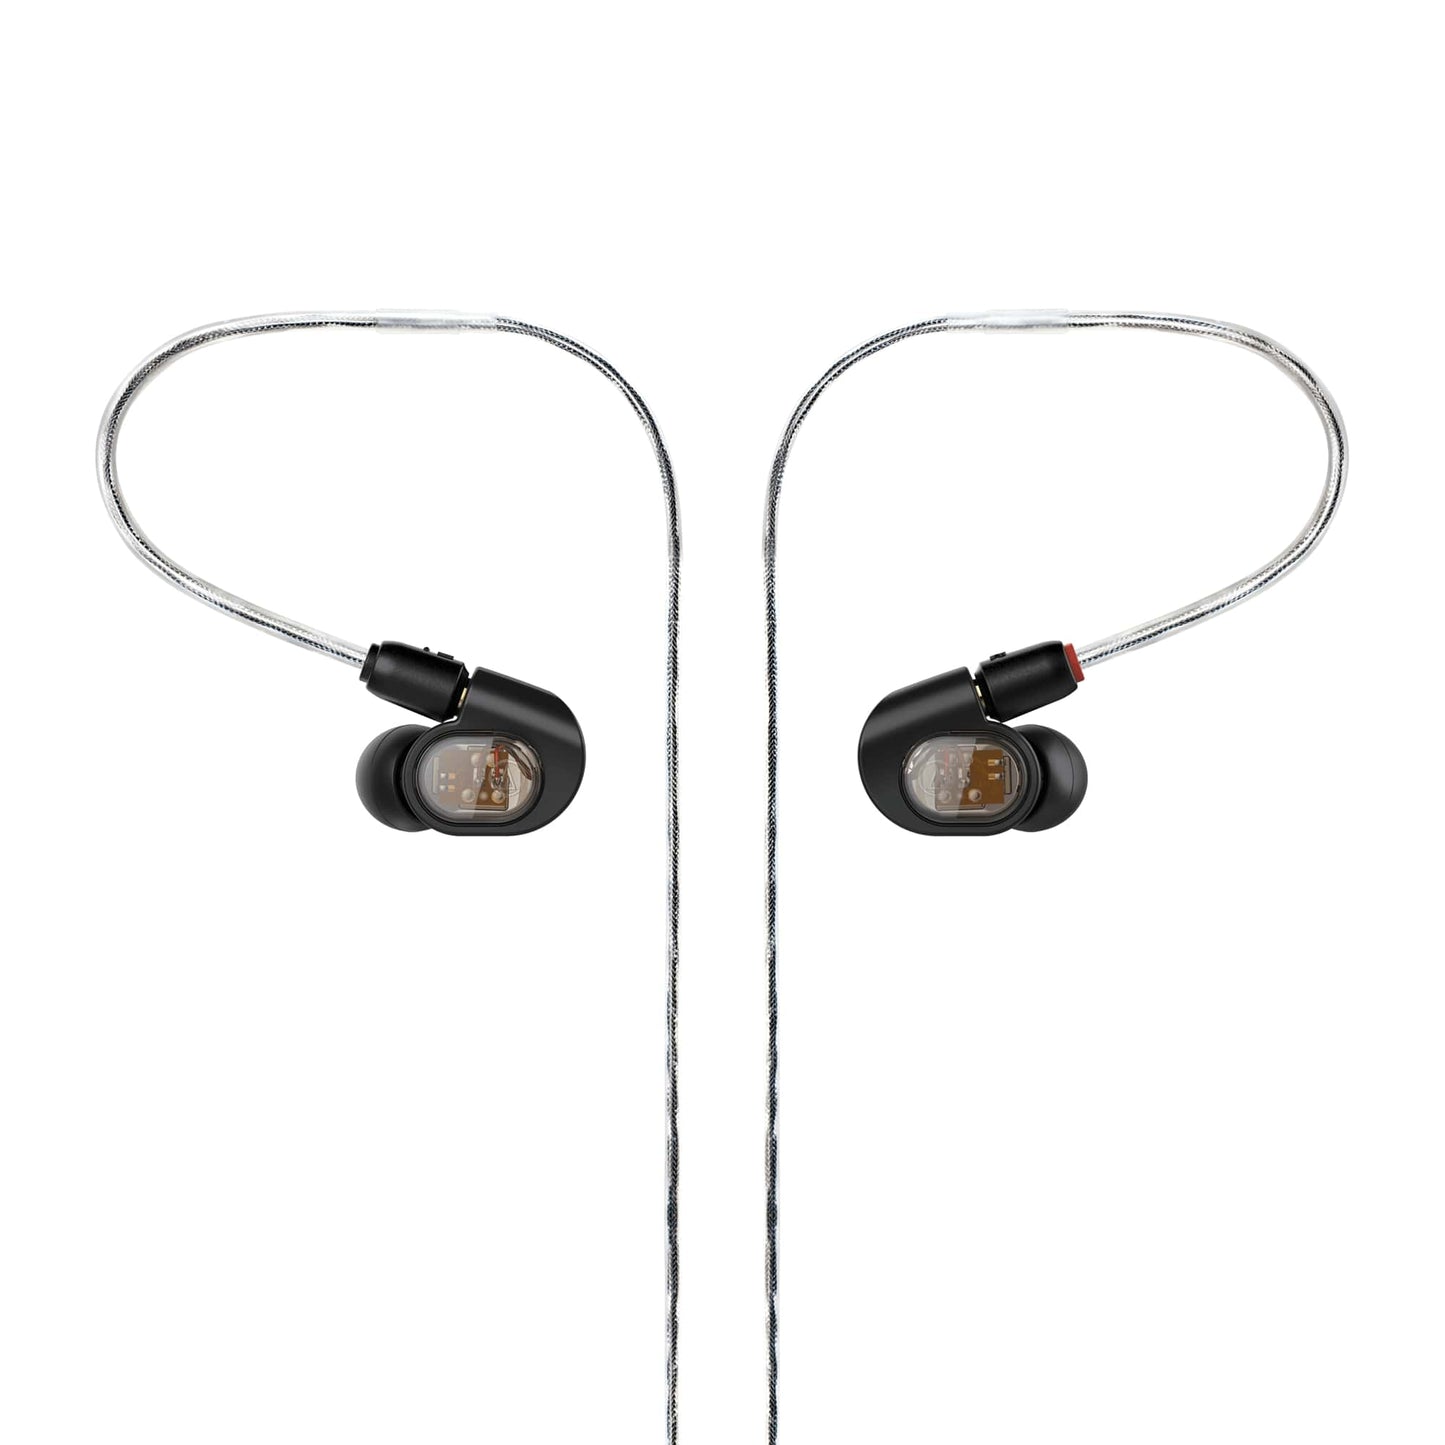 Audio-Technica ATH-E70 Professional In-Ear Headphones